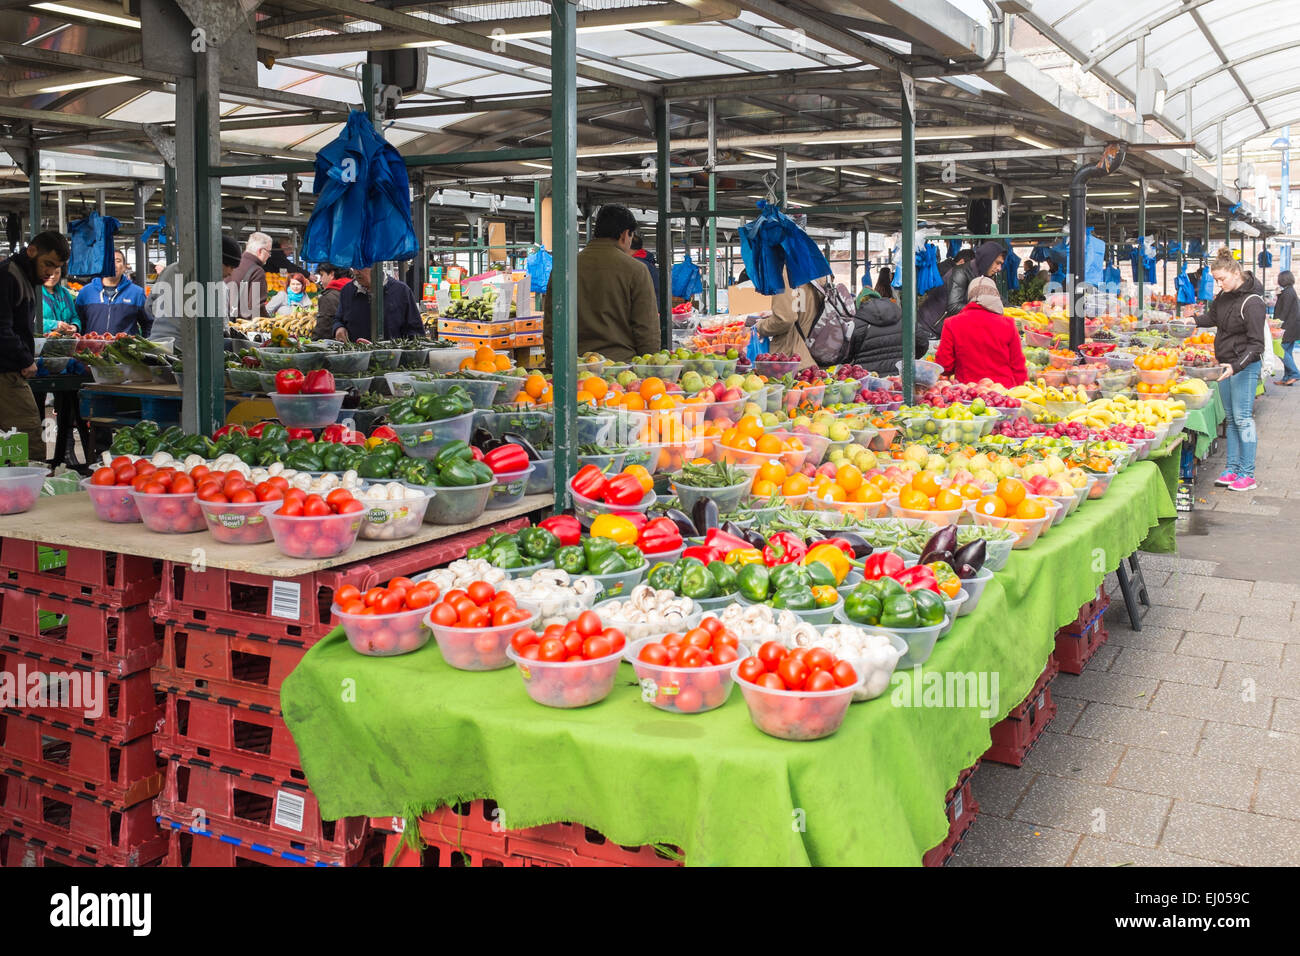 Fruit and vegetable stalls at Birmingham's Bull Ring Market Stock Photo